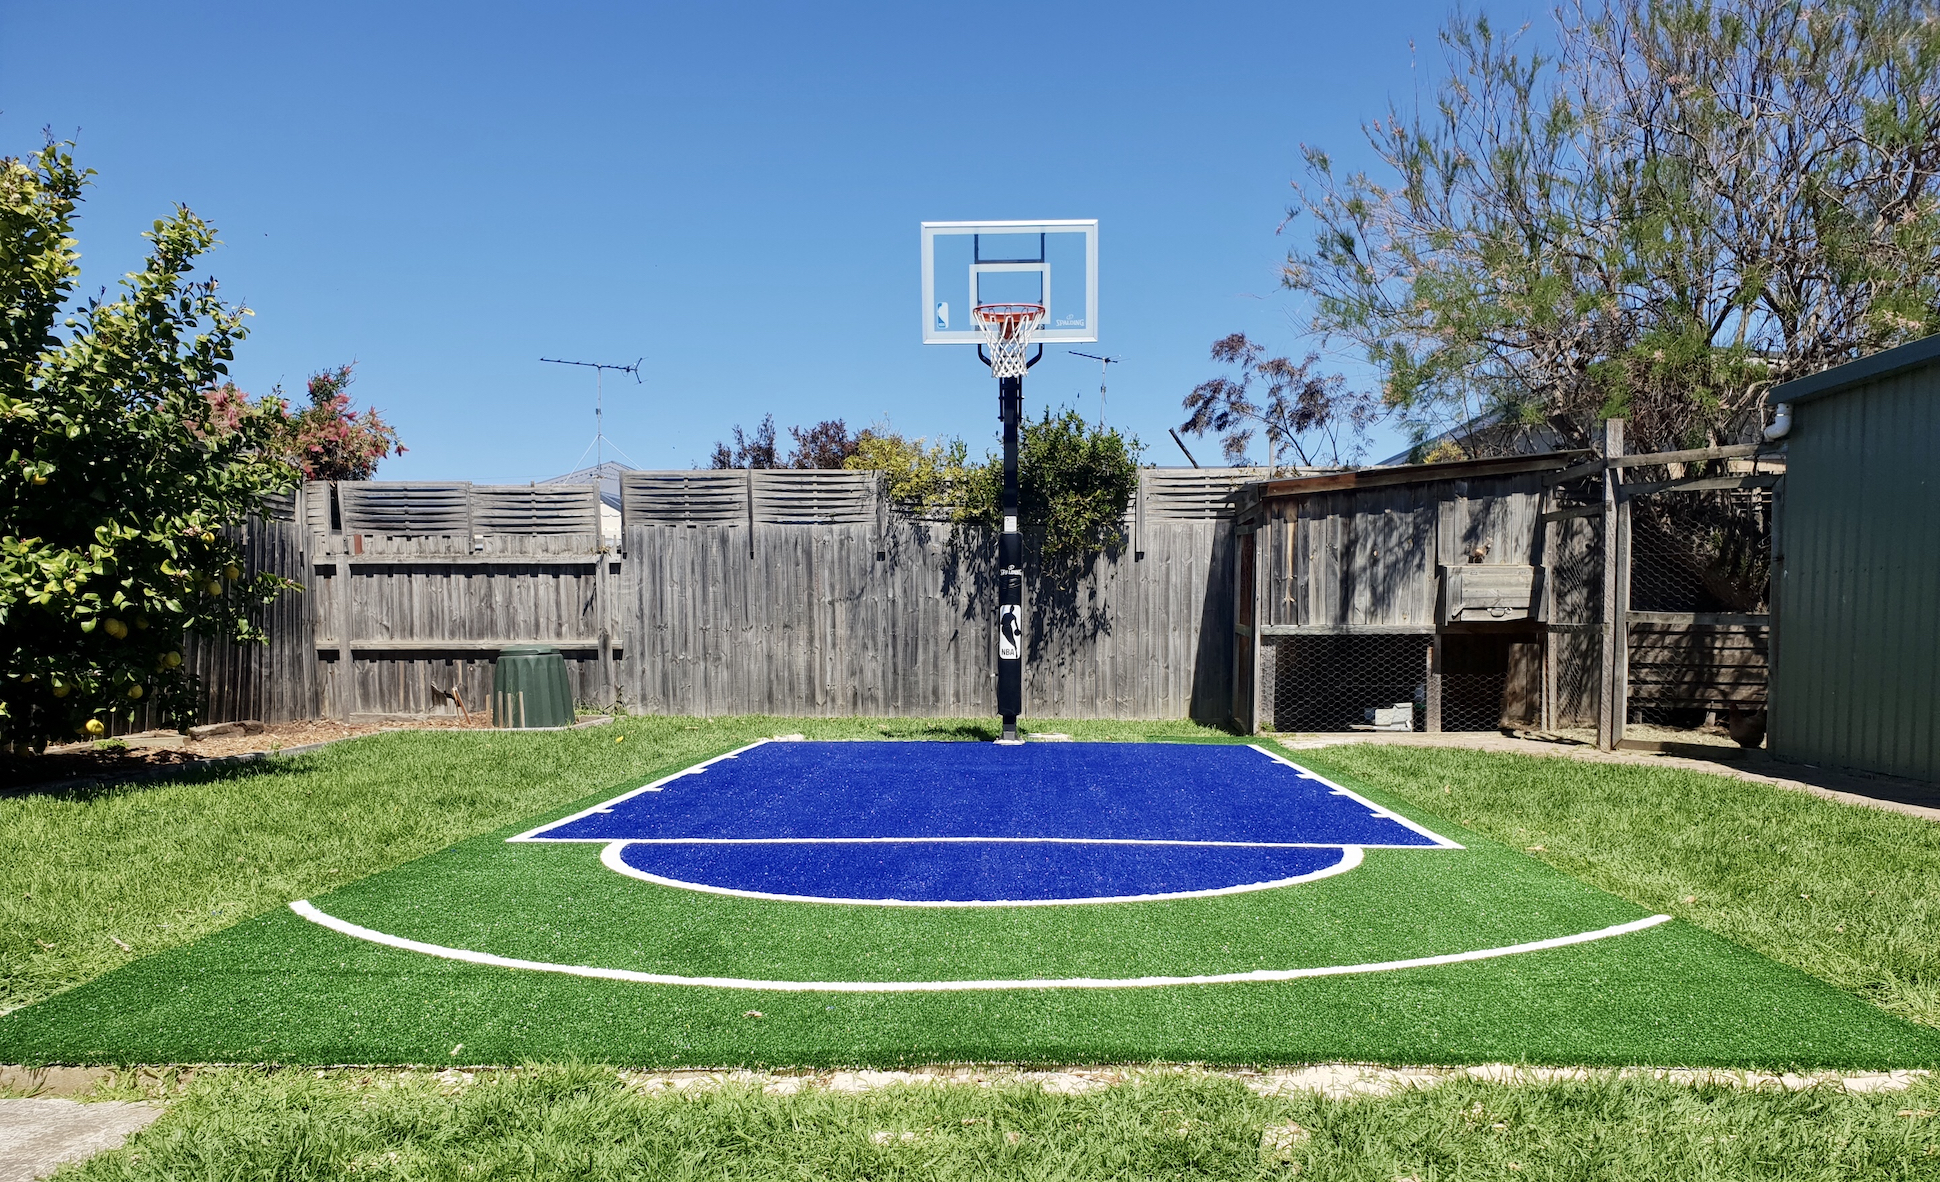 Geelong Basketball Turf 132